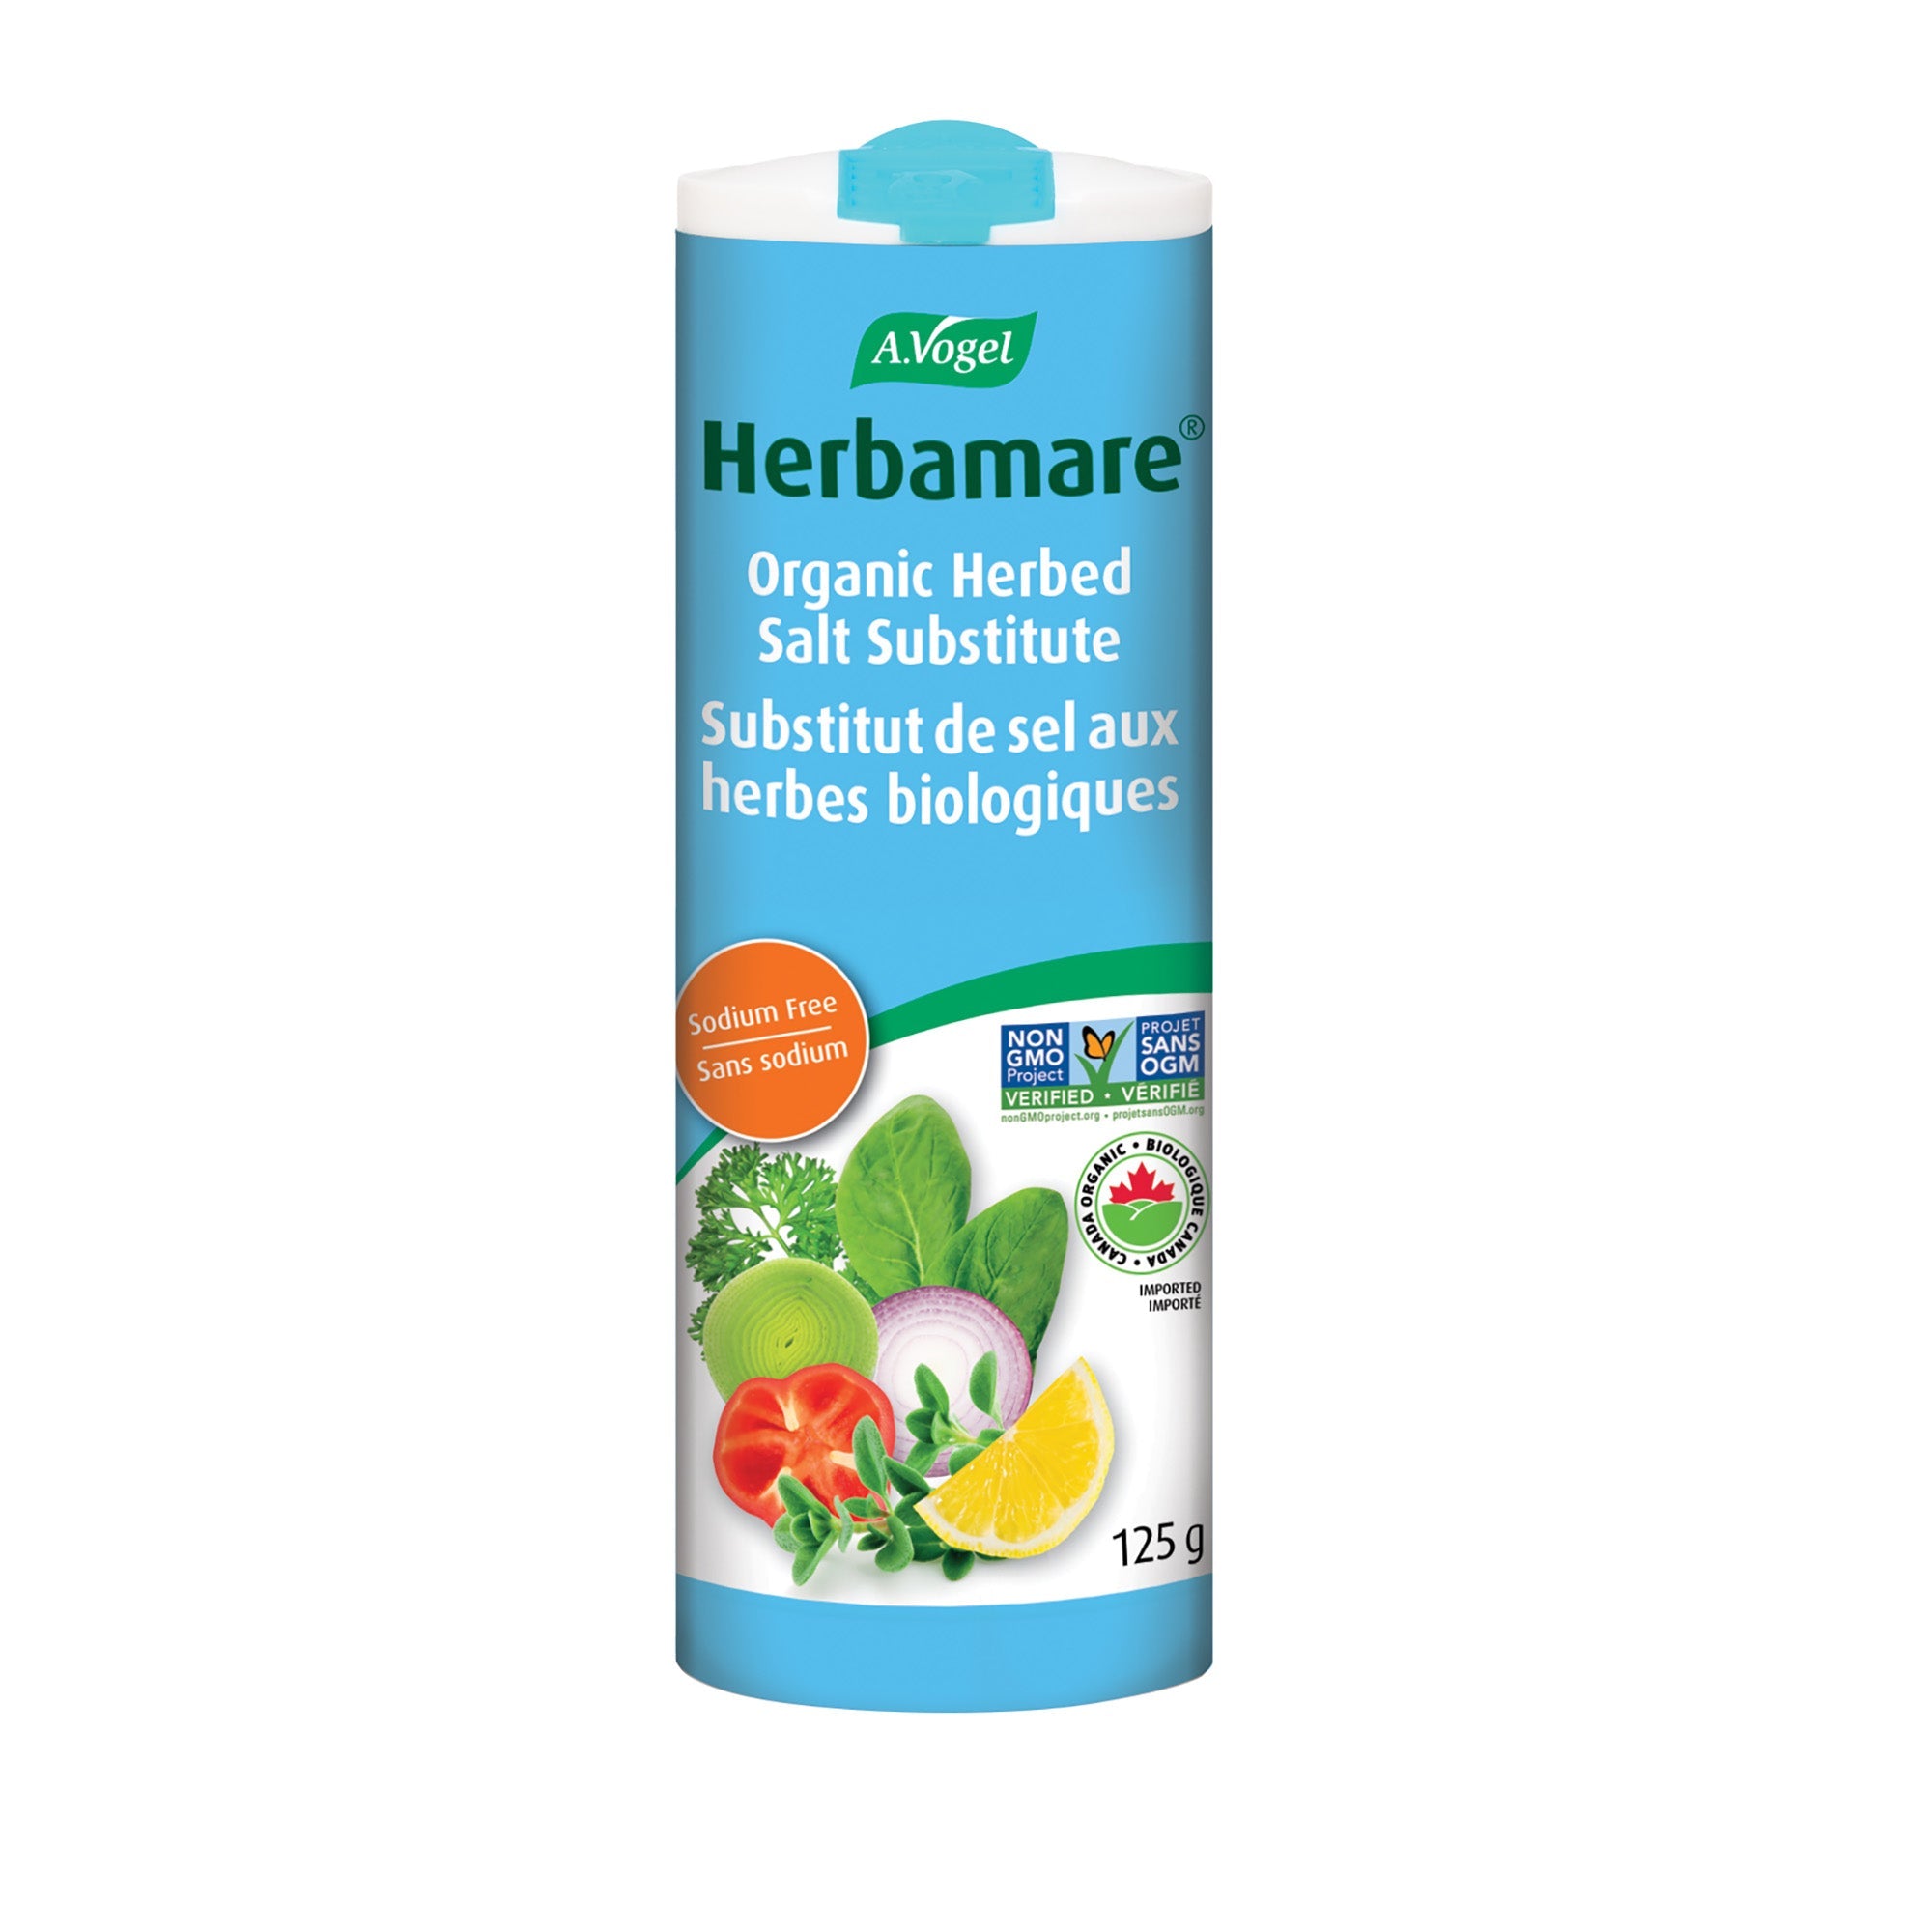 Herbamare Sodium-free - Organic Herbed Salt Substitute 125 gr - A.Vogel Canada